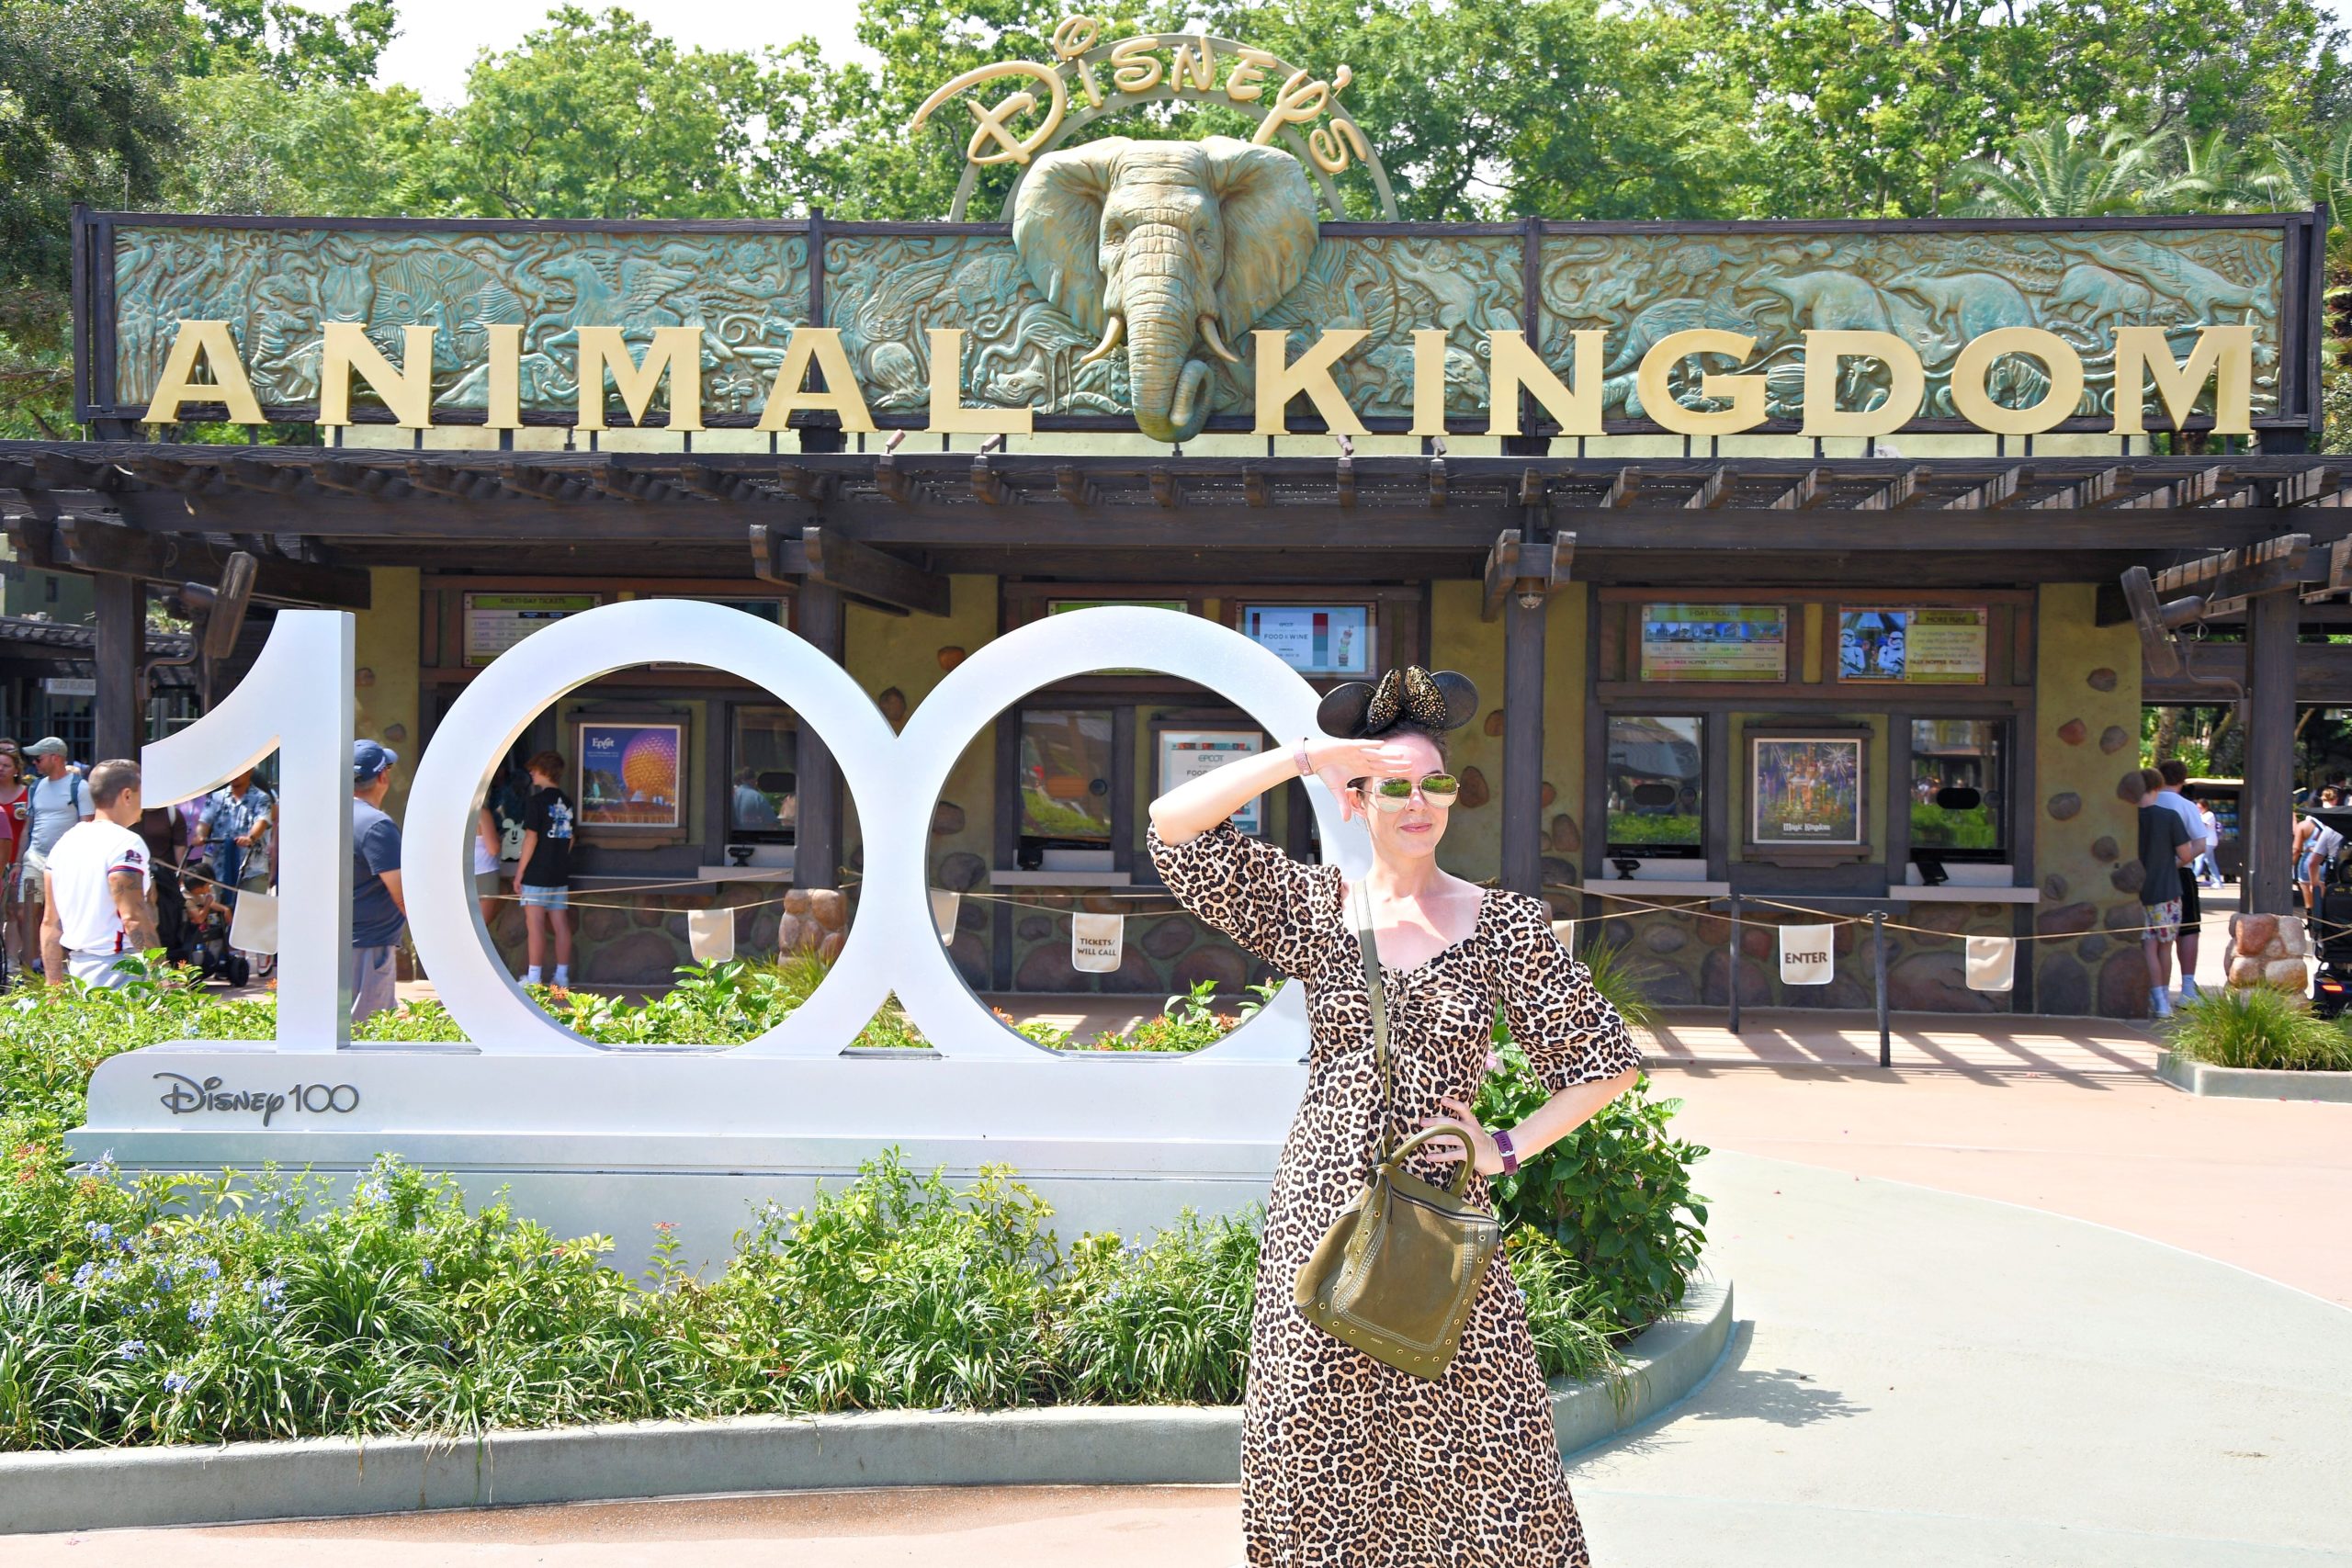 Disney 100 PhotoPass at Disney's Animal Kingdom